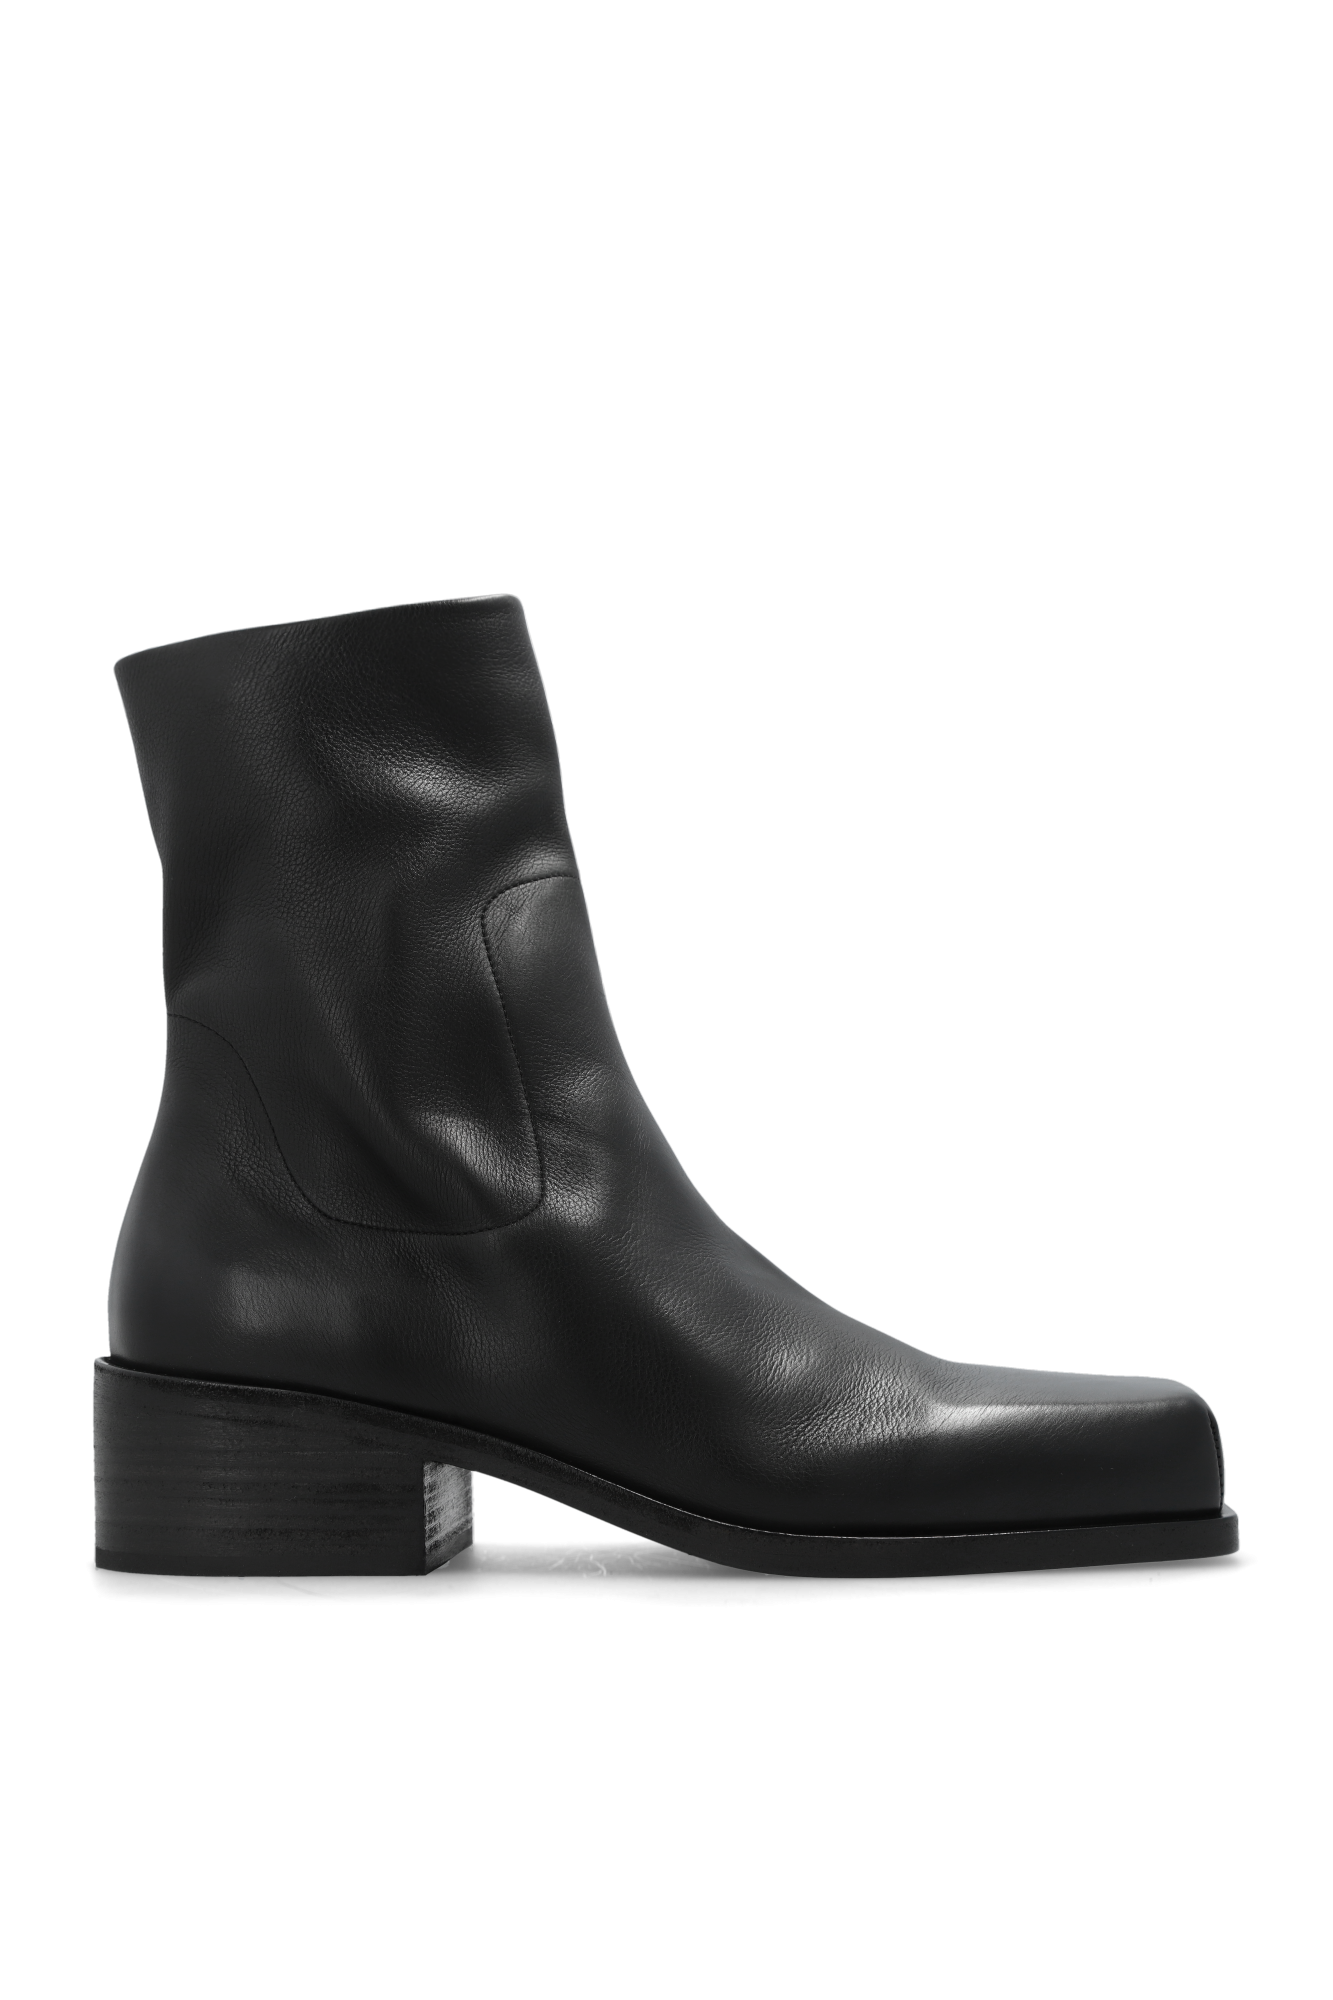 Marsell Bottega Veneta Round Toe Boots in Black